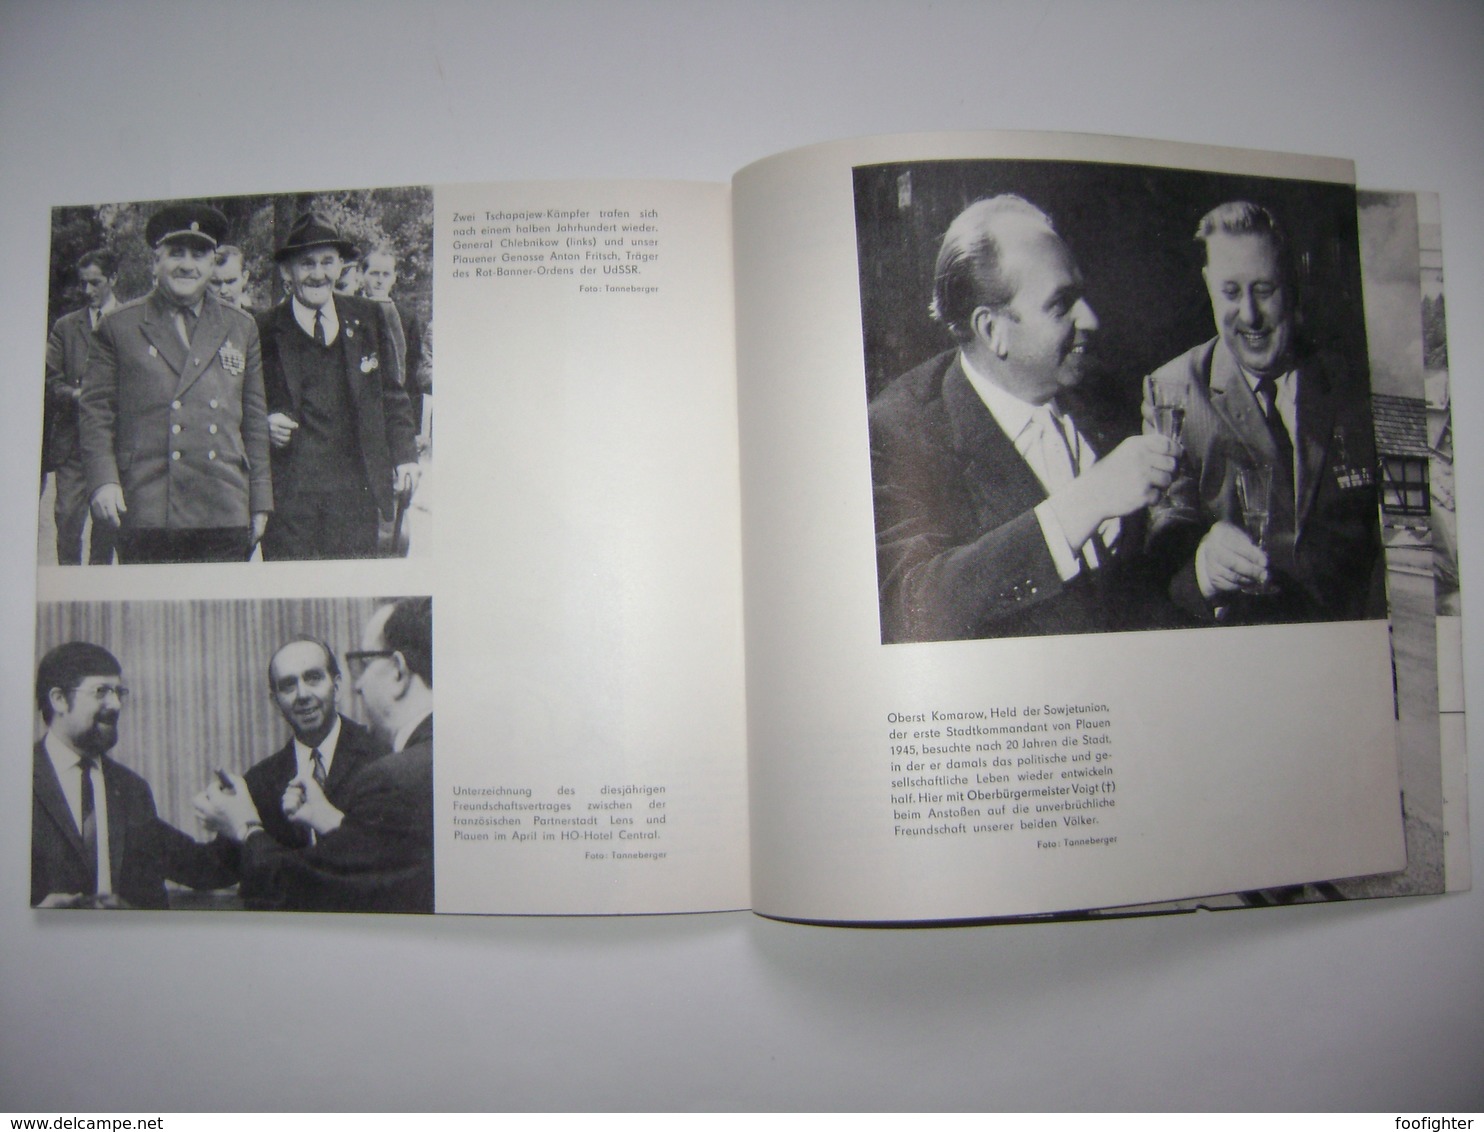 Germany DDR: 20 Jahre PLAUEN Stadt u. Land 1969, brochure 96 pages, photos history buildings industry sport politics etc